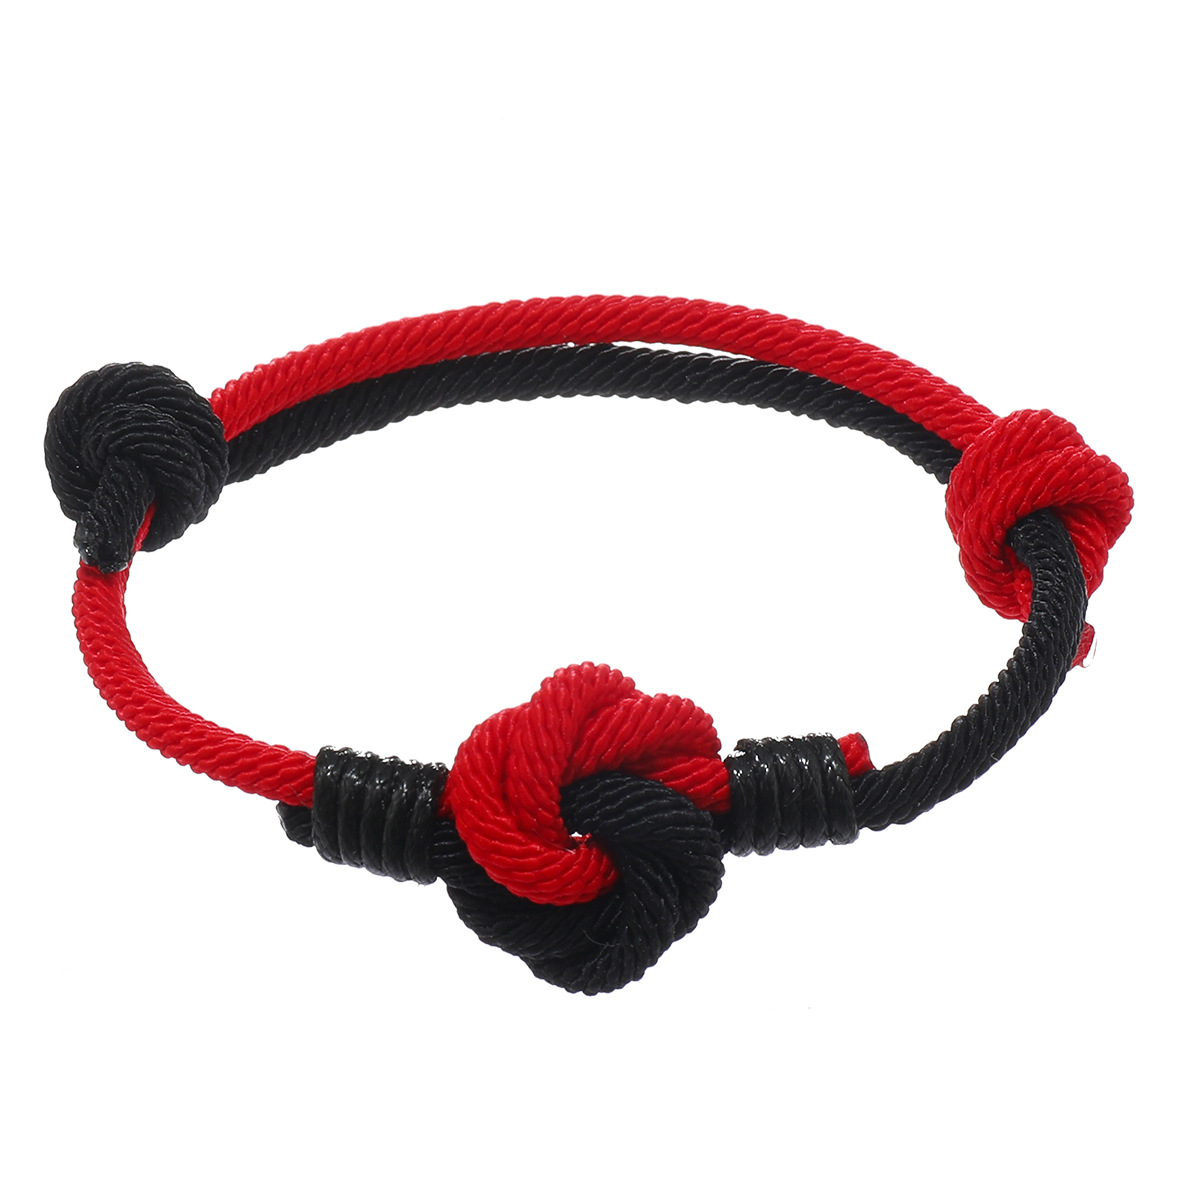 3:Black   red (Mandala knot)